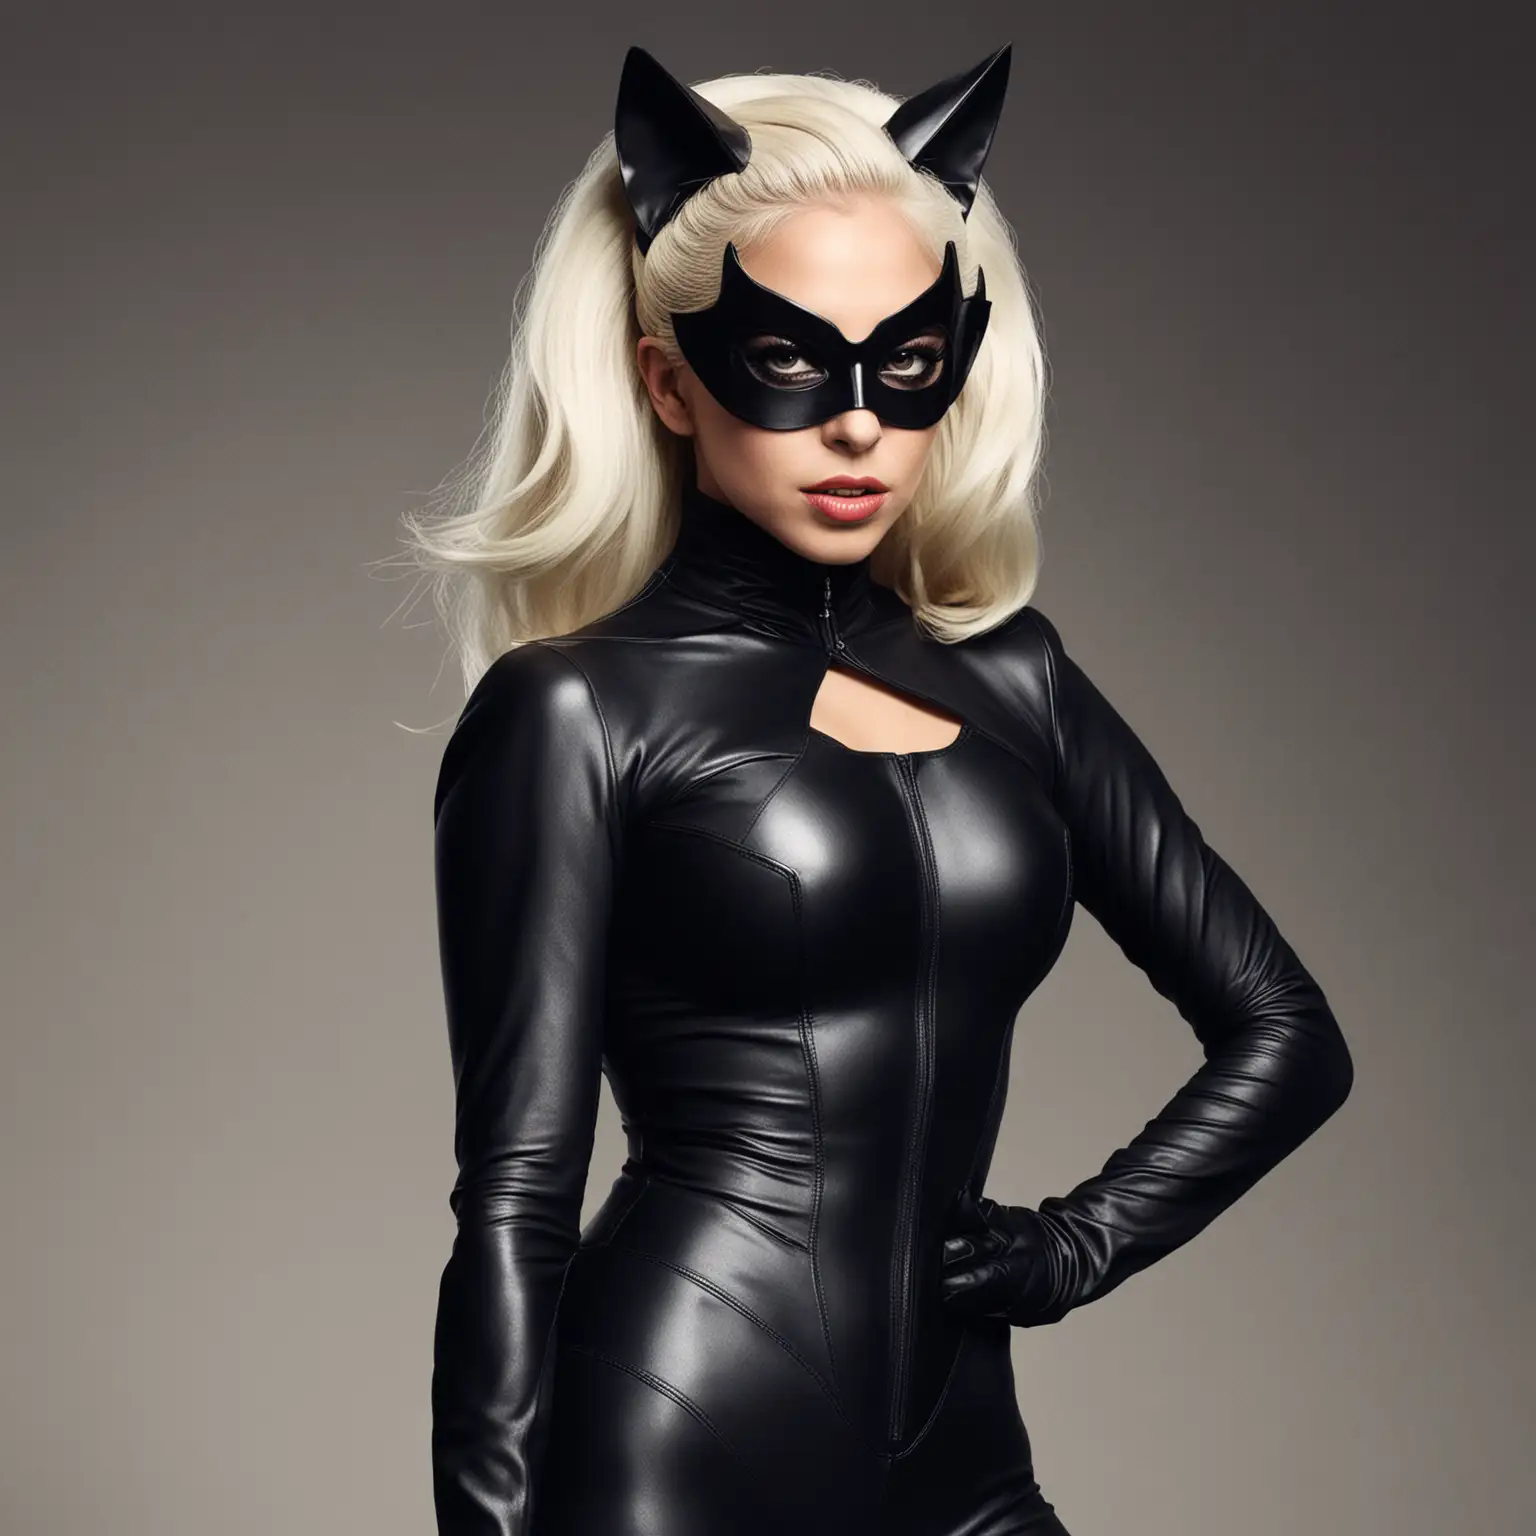 Lady Gaga as cat woman